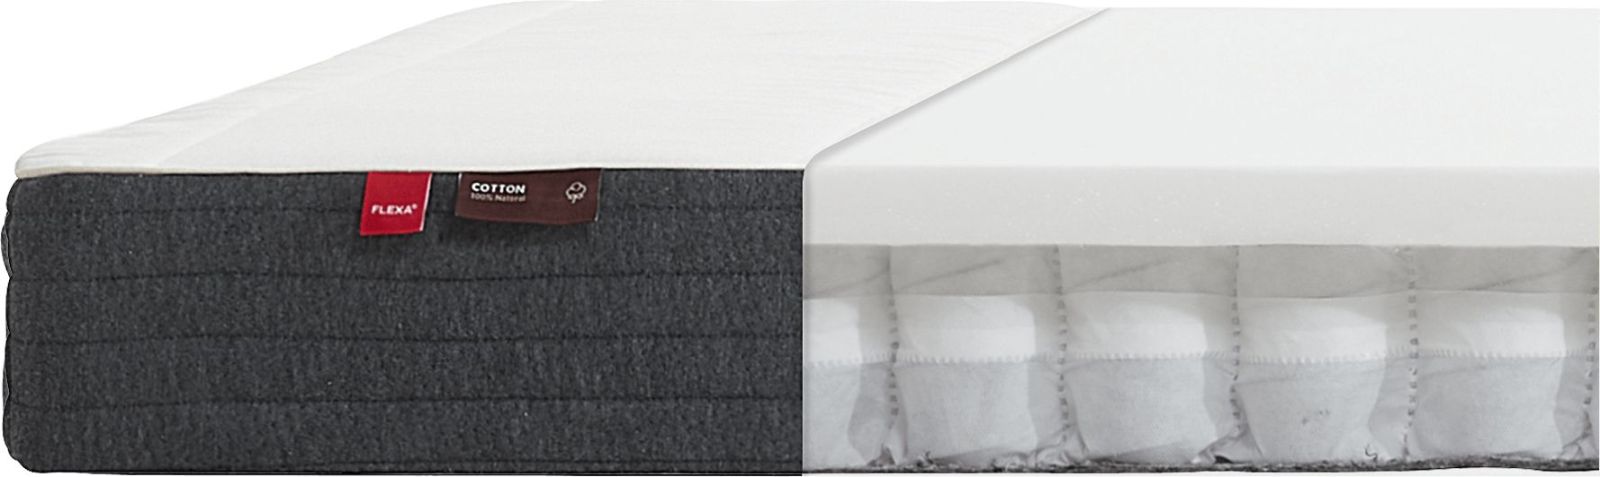 Flexa Pružinová matrace Flexa - Sleep s bavlněným potahem 200x90 cm